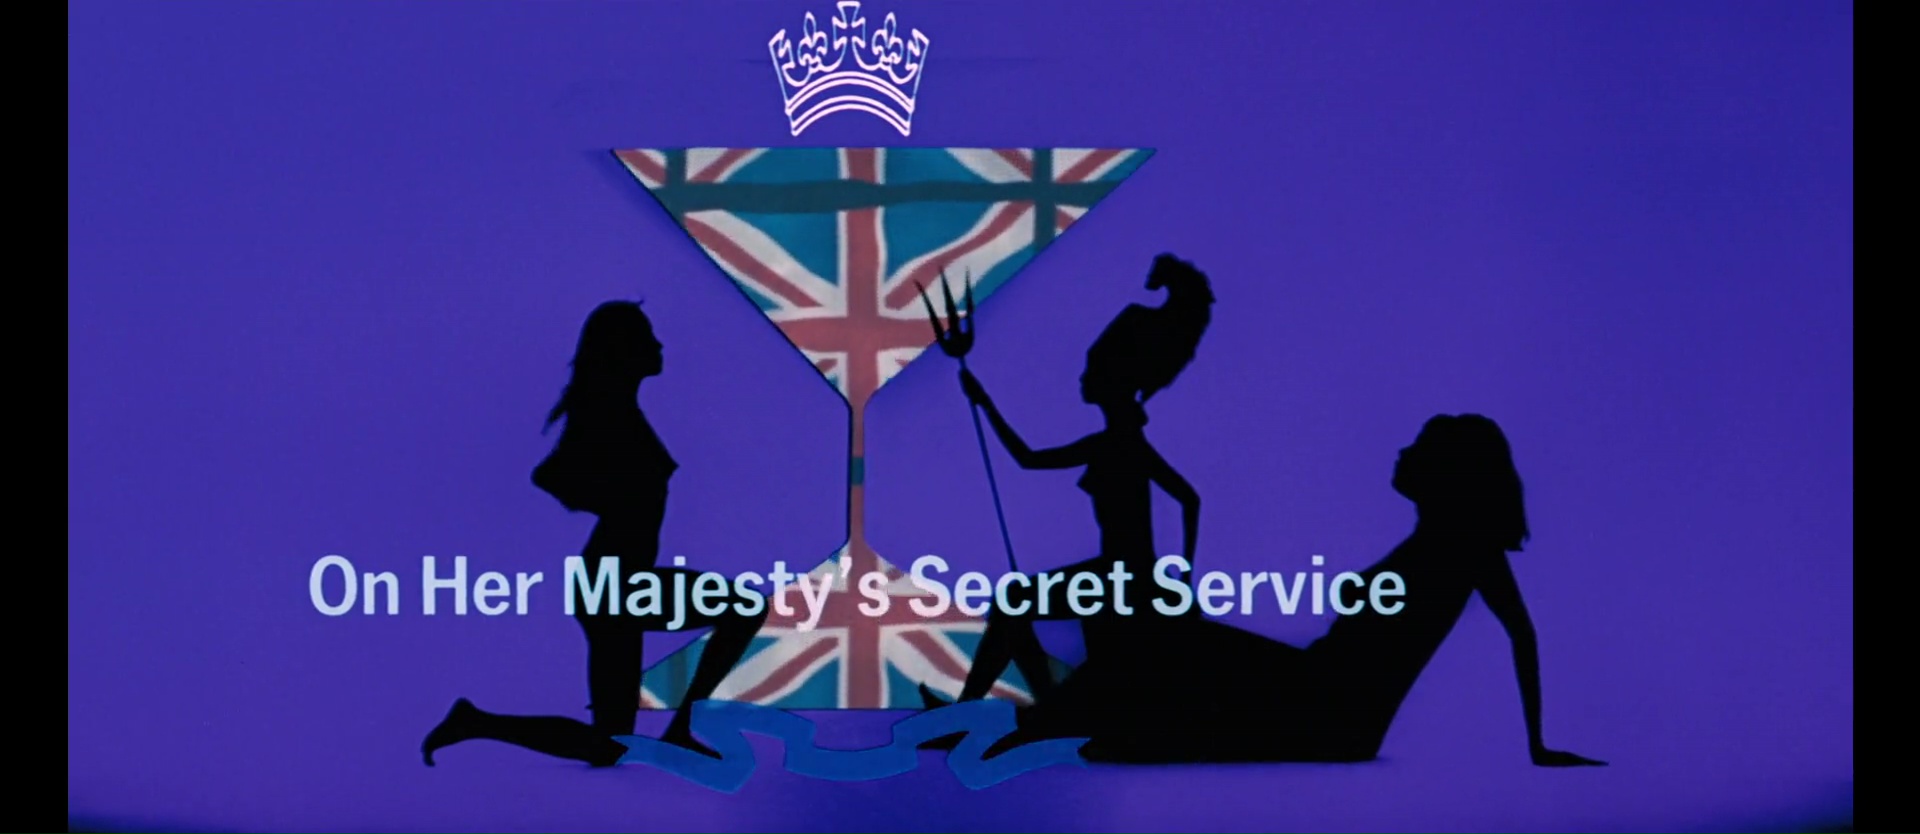 AU SERVICE SECRET DE SA MAJESTÉ (On Her Majesty’s Secret Service) de Peter Hunt (1969)